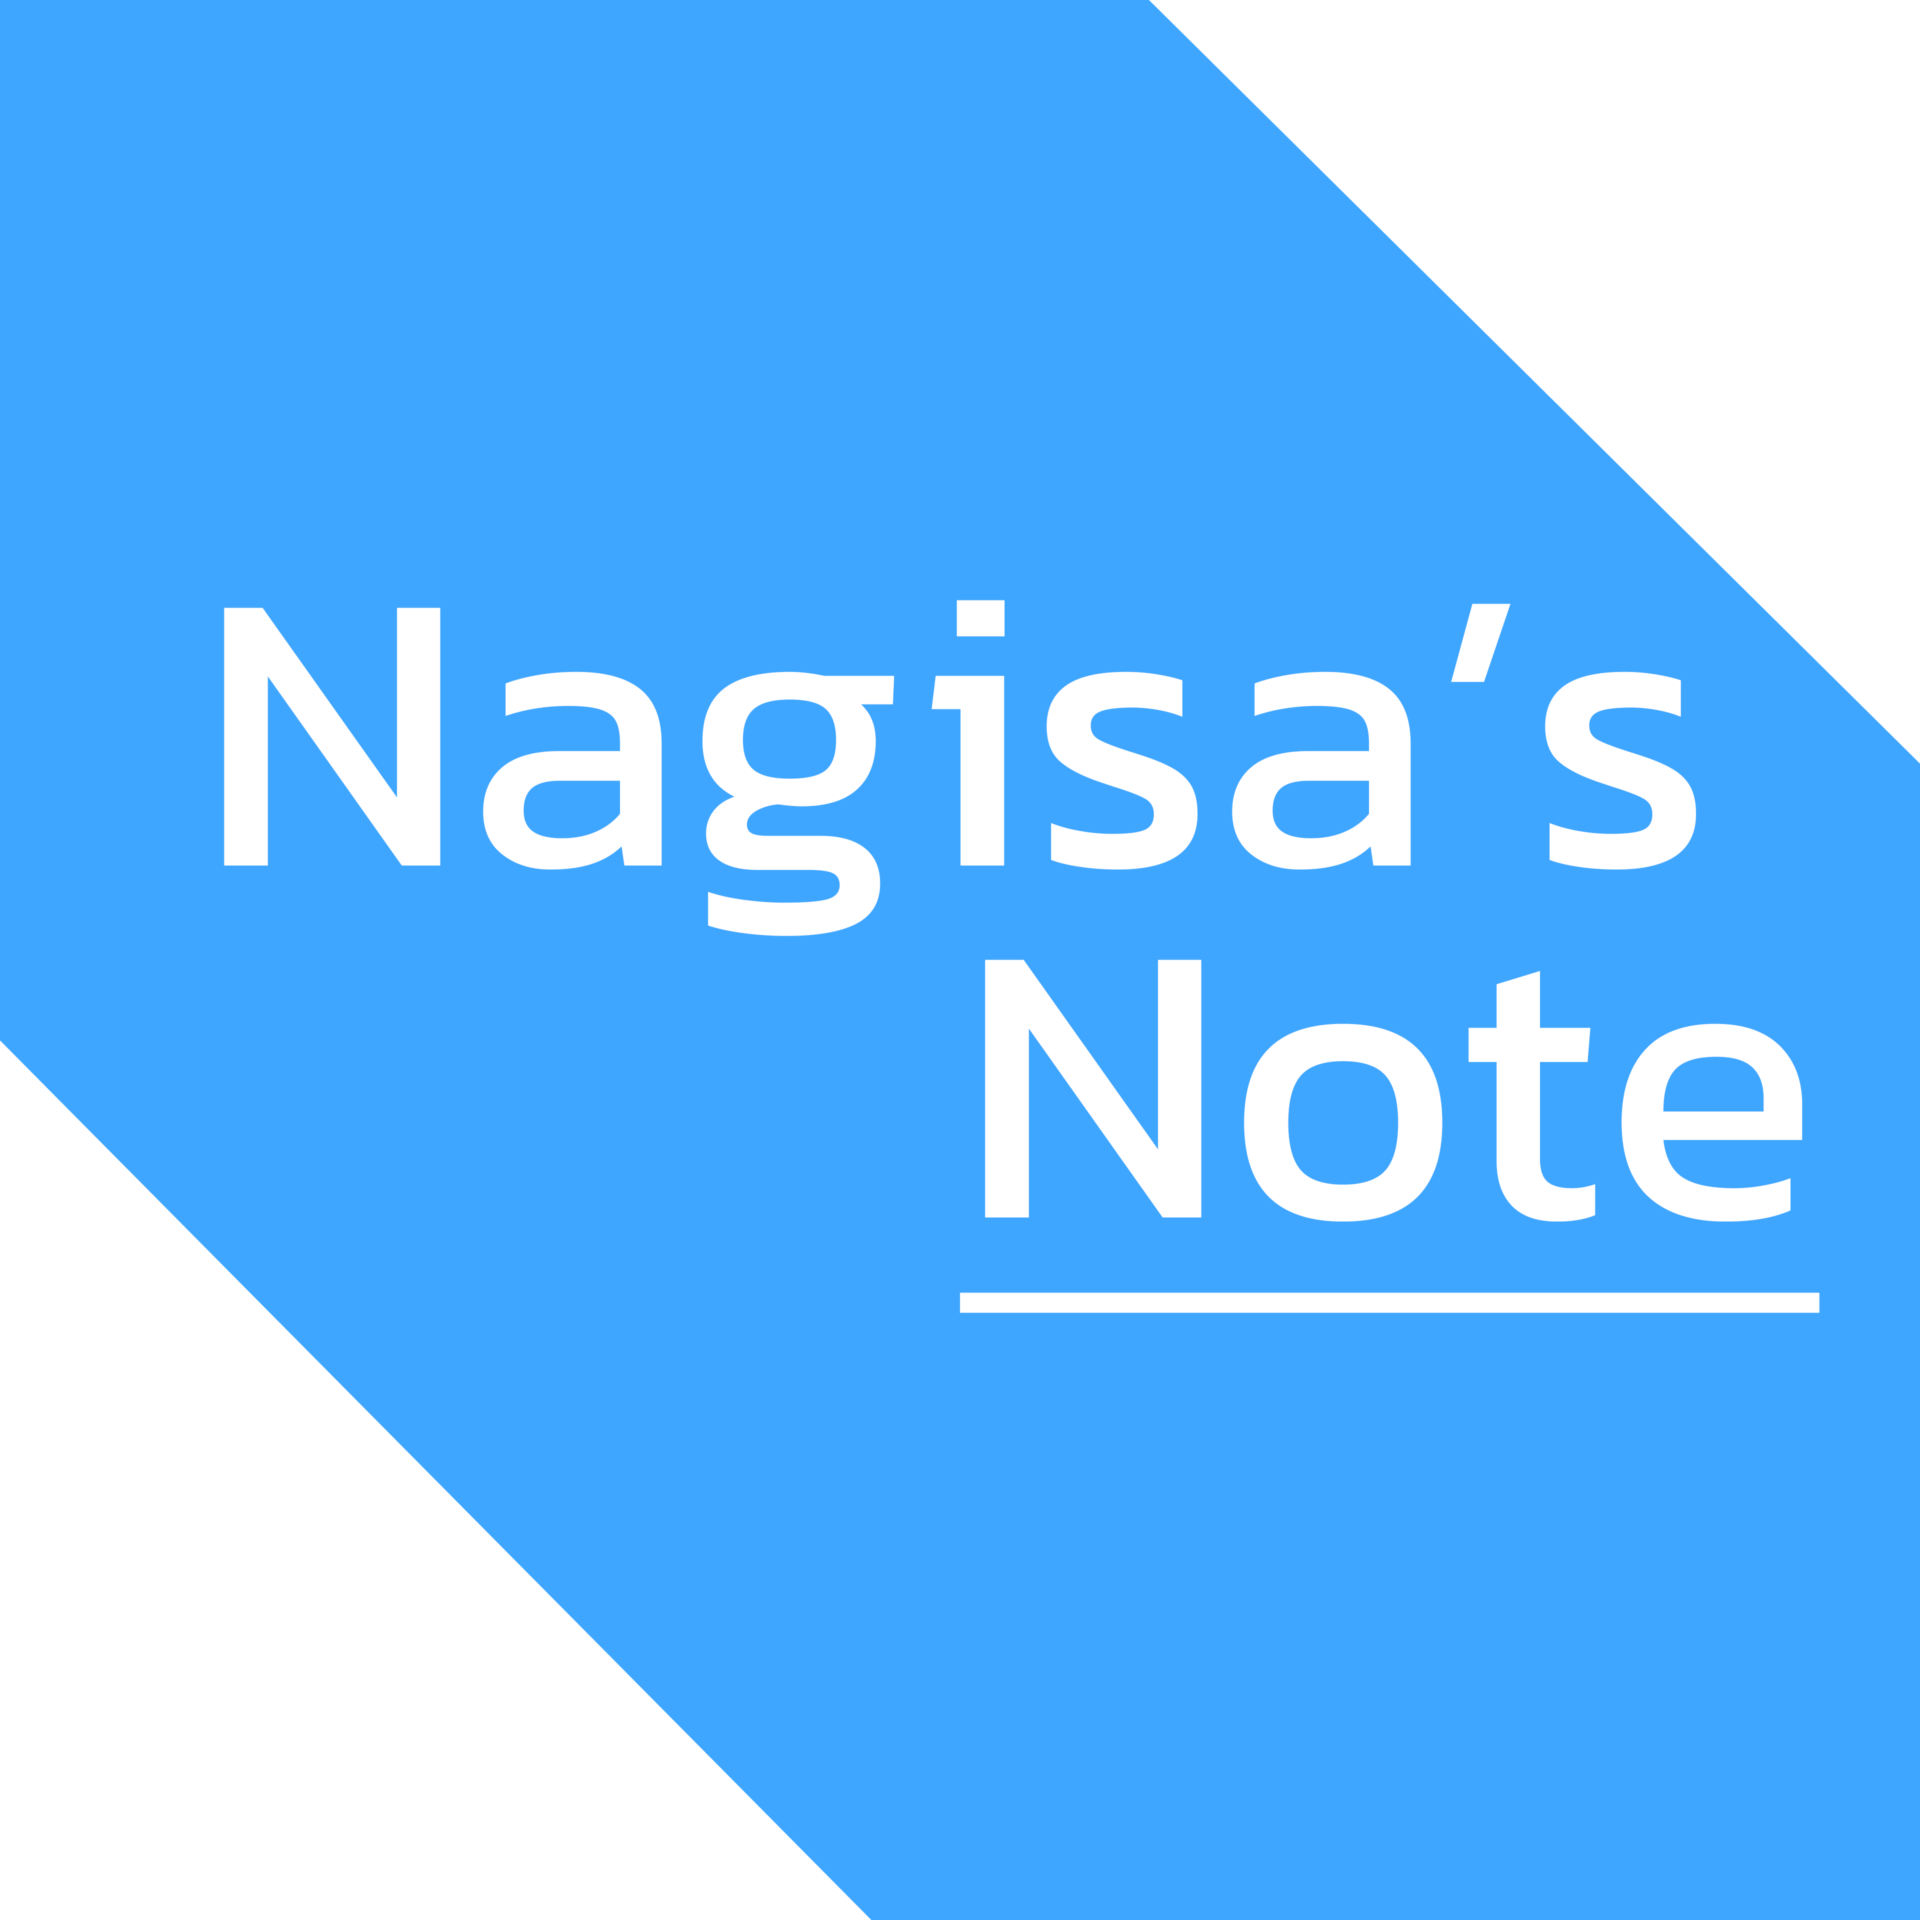 Nota de Nagisa